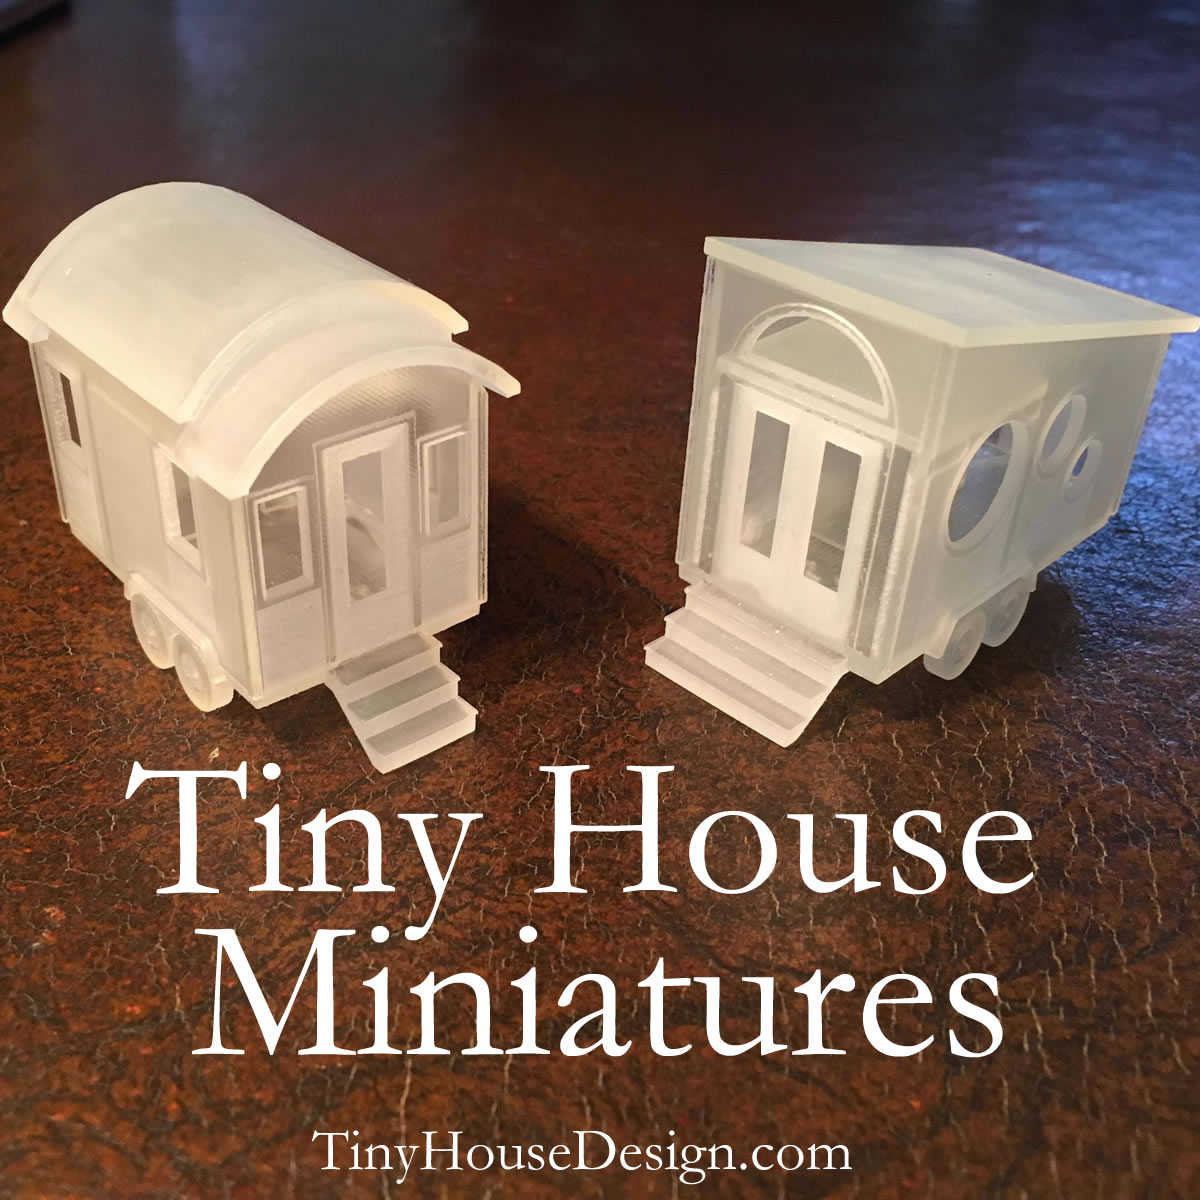 Photos of Our Tiny House Miniatures